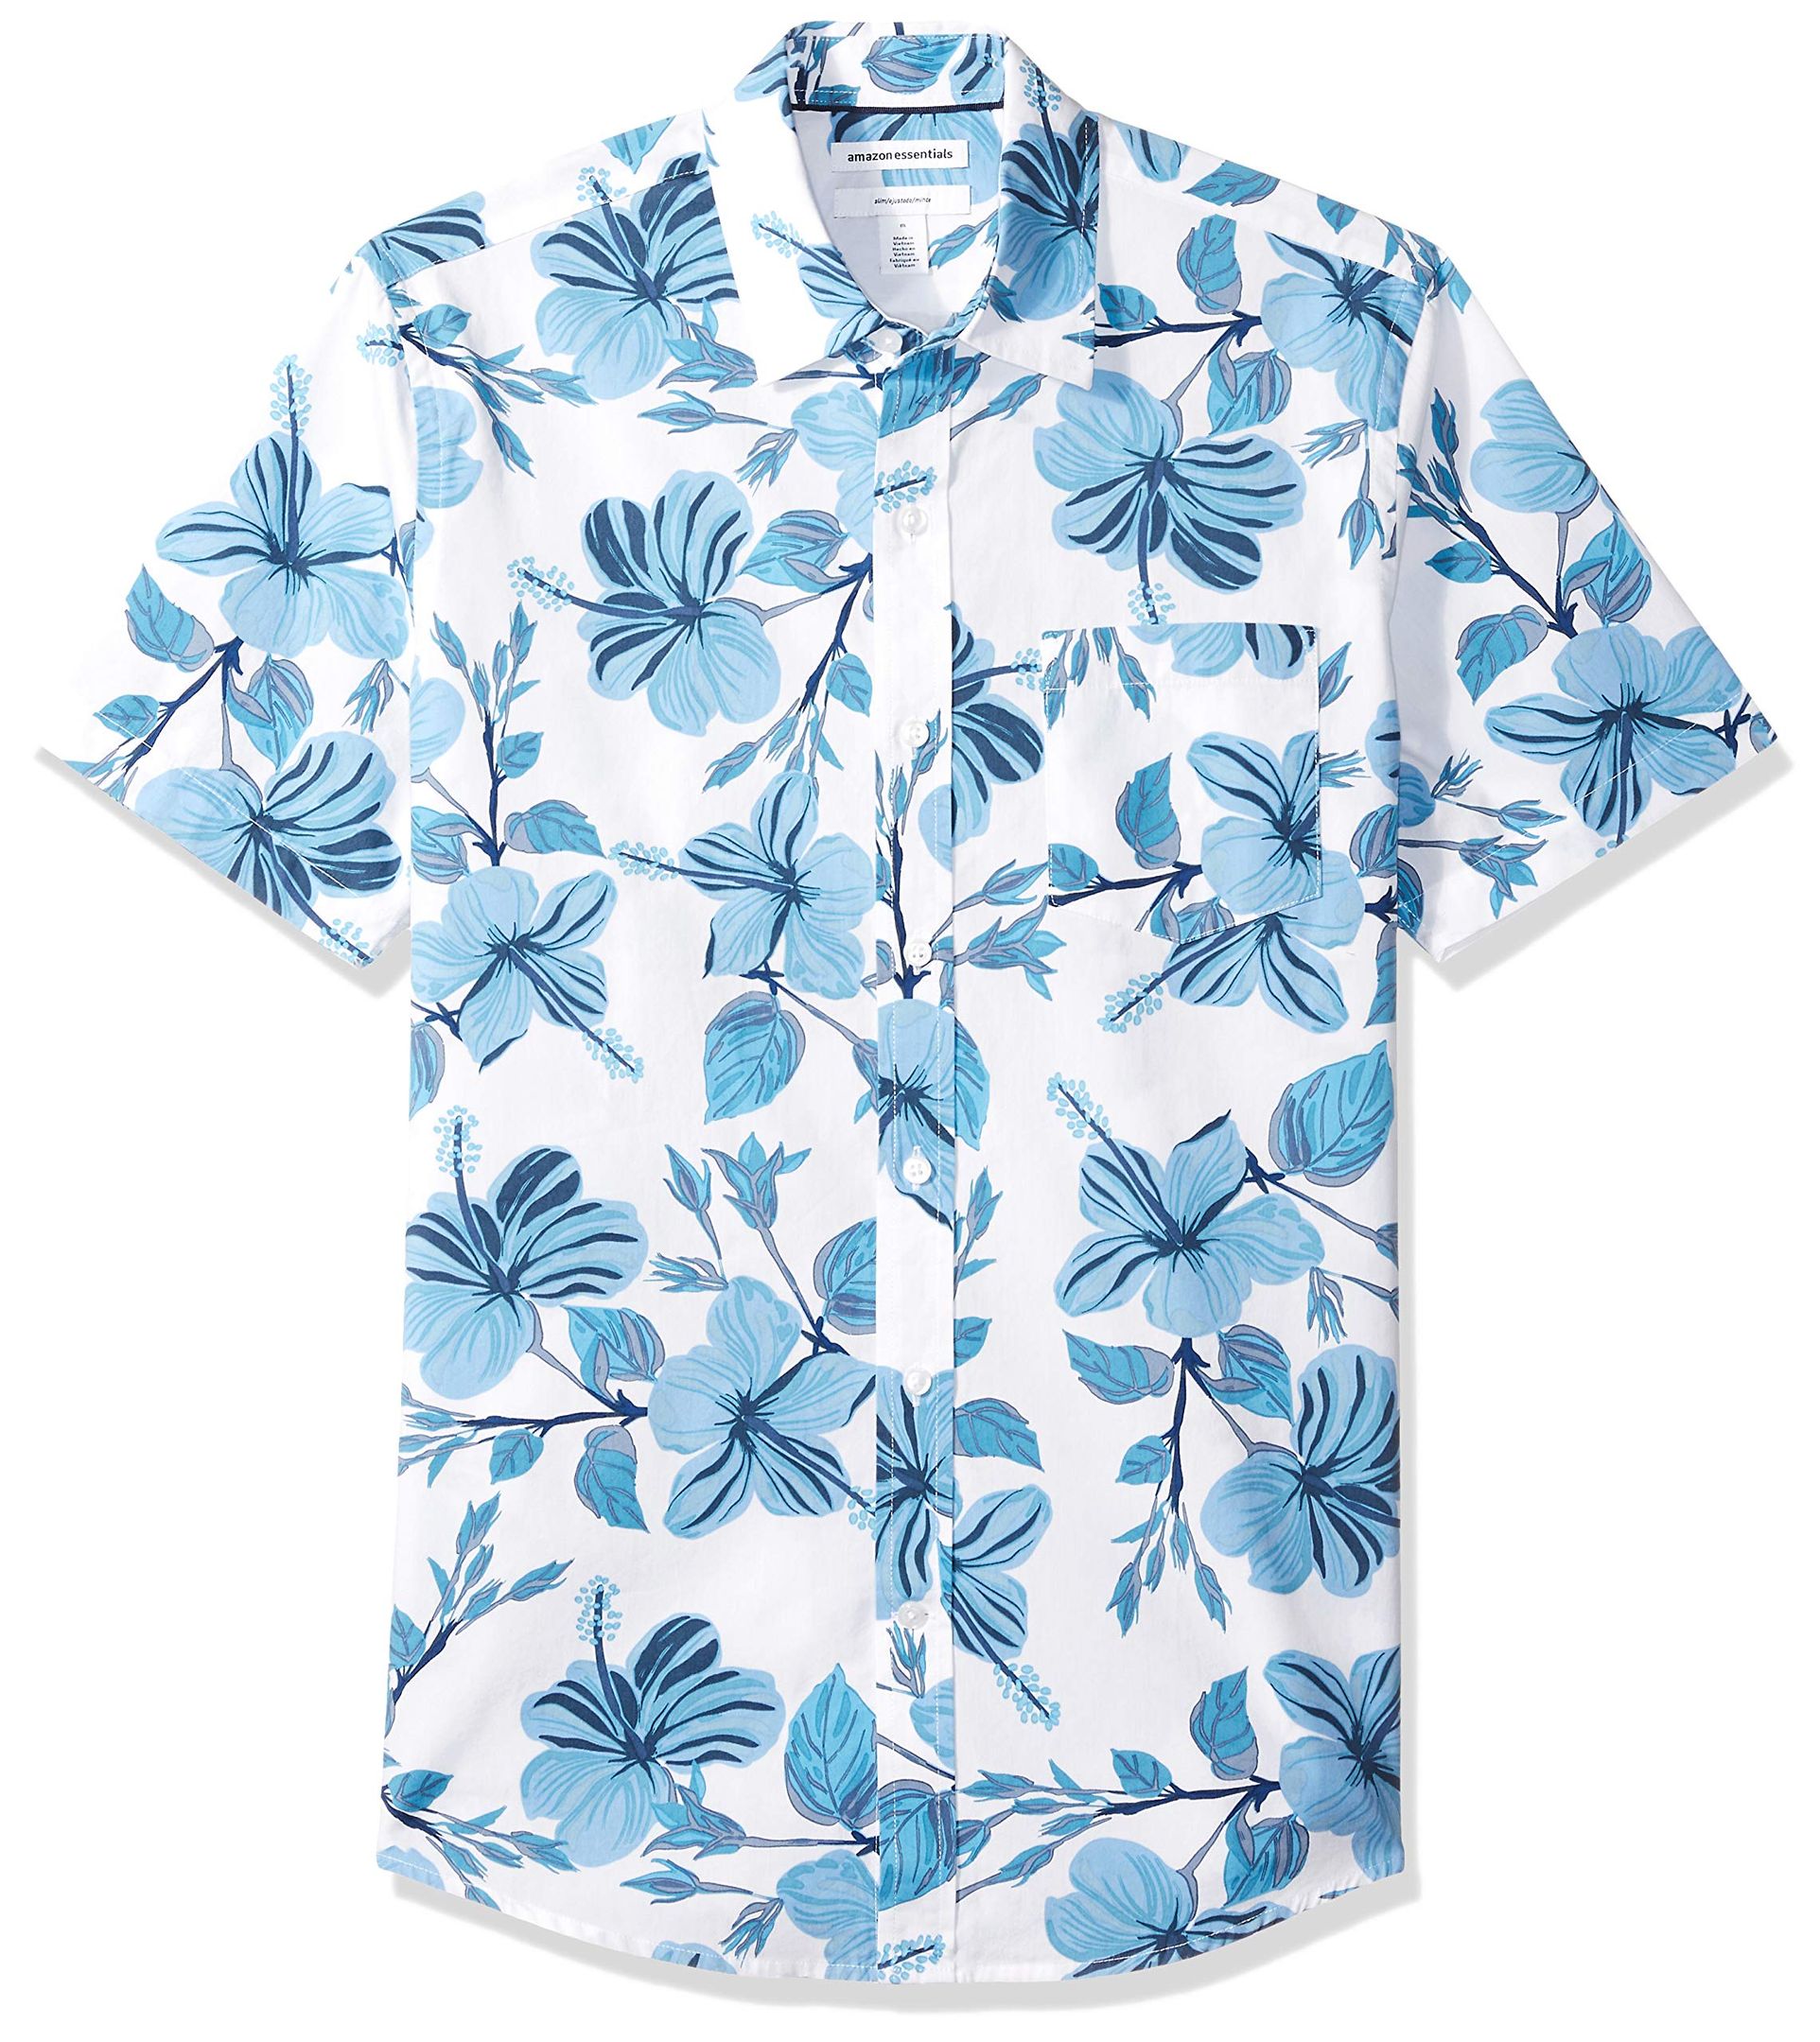 flowers blue white nice design hawaiian shirt dhc18061013 k4llq